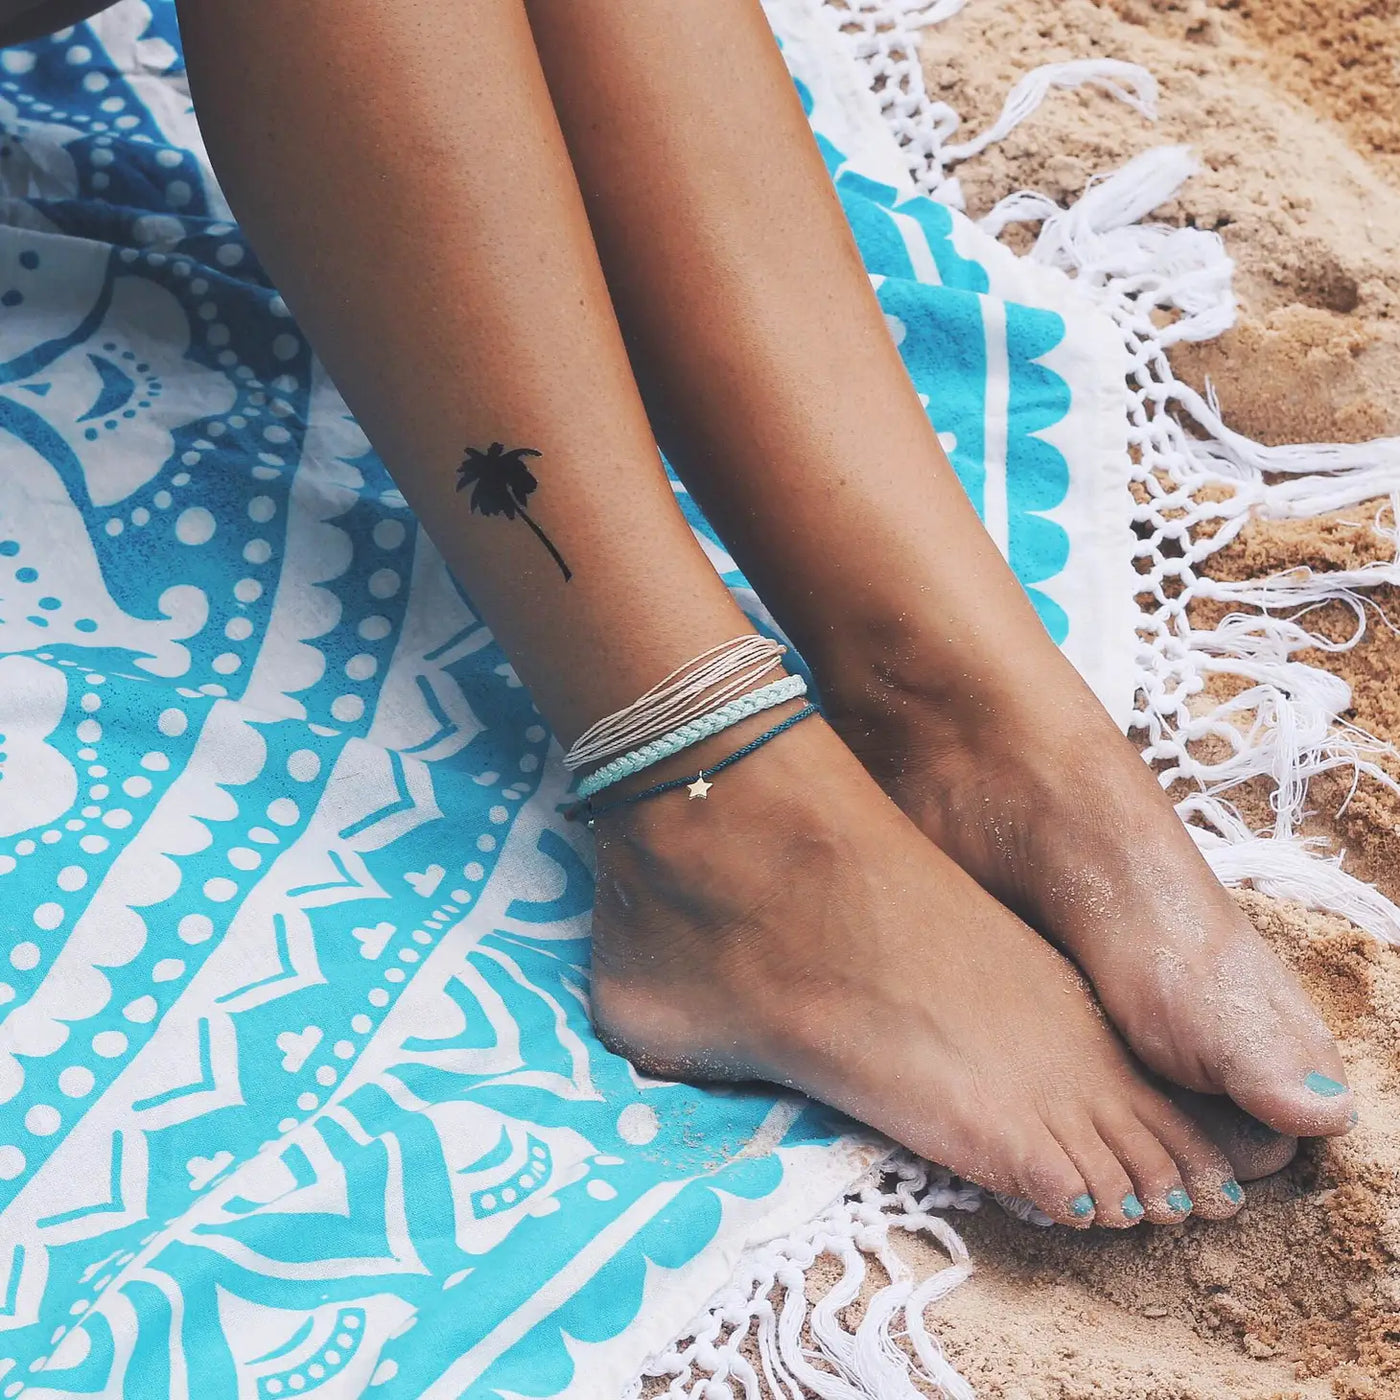 "The Beach Bum" Temporary Tattoo Pack